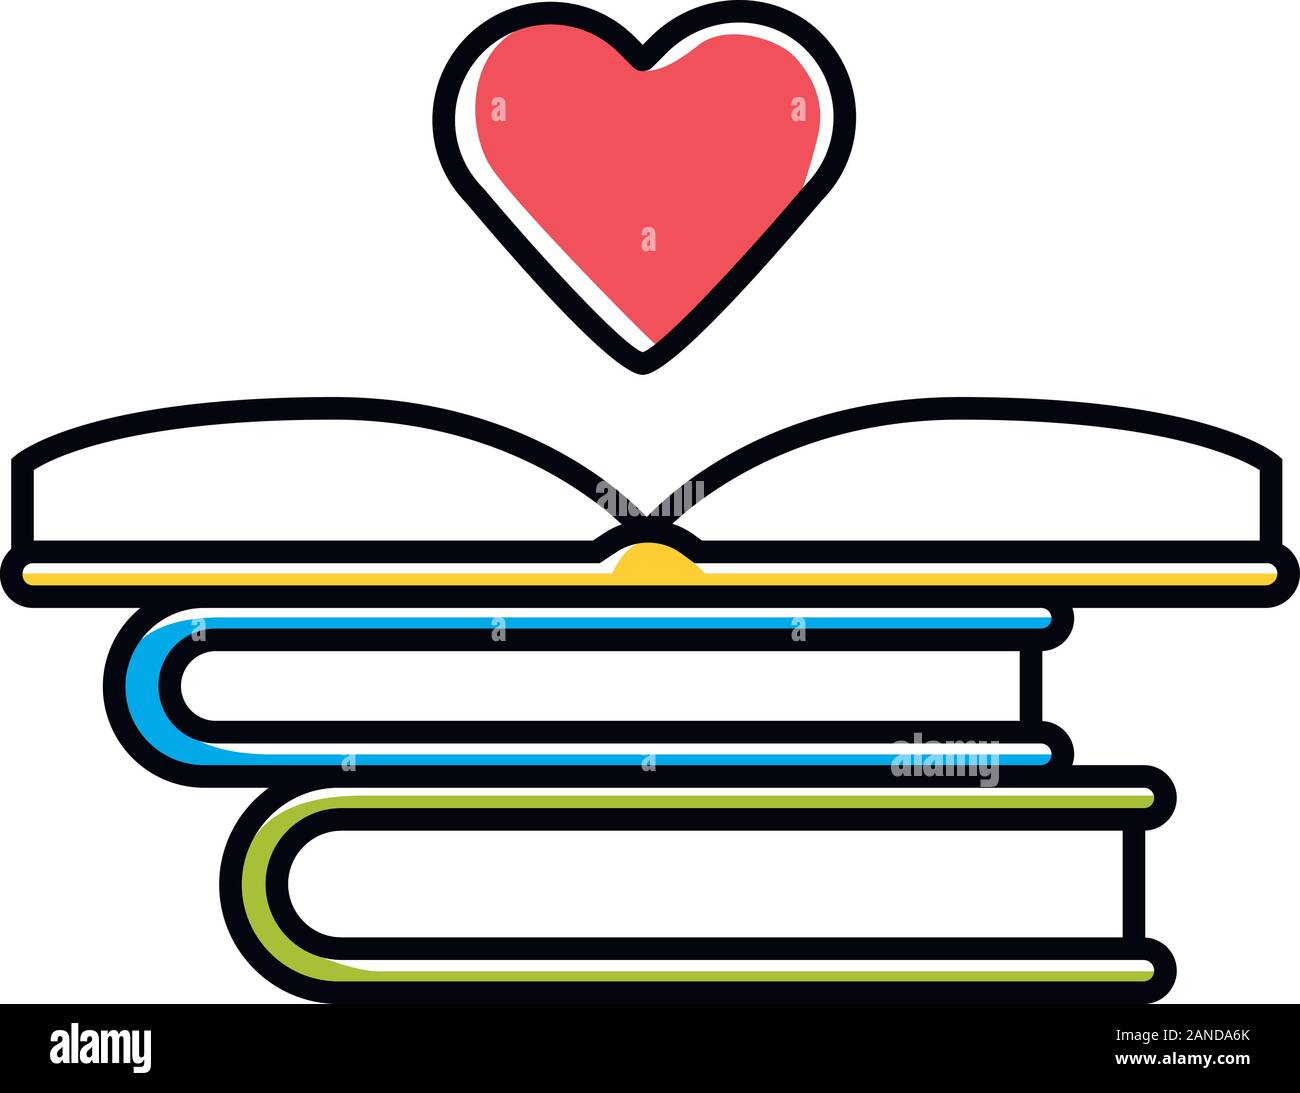 clip art of reading for love